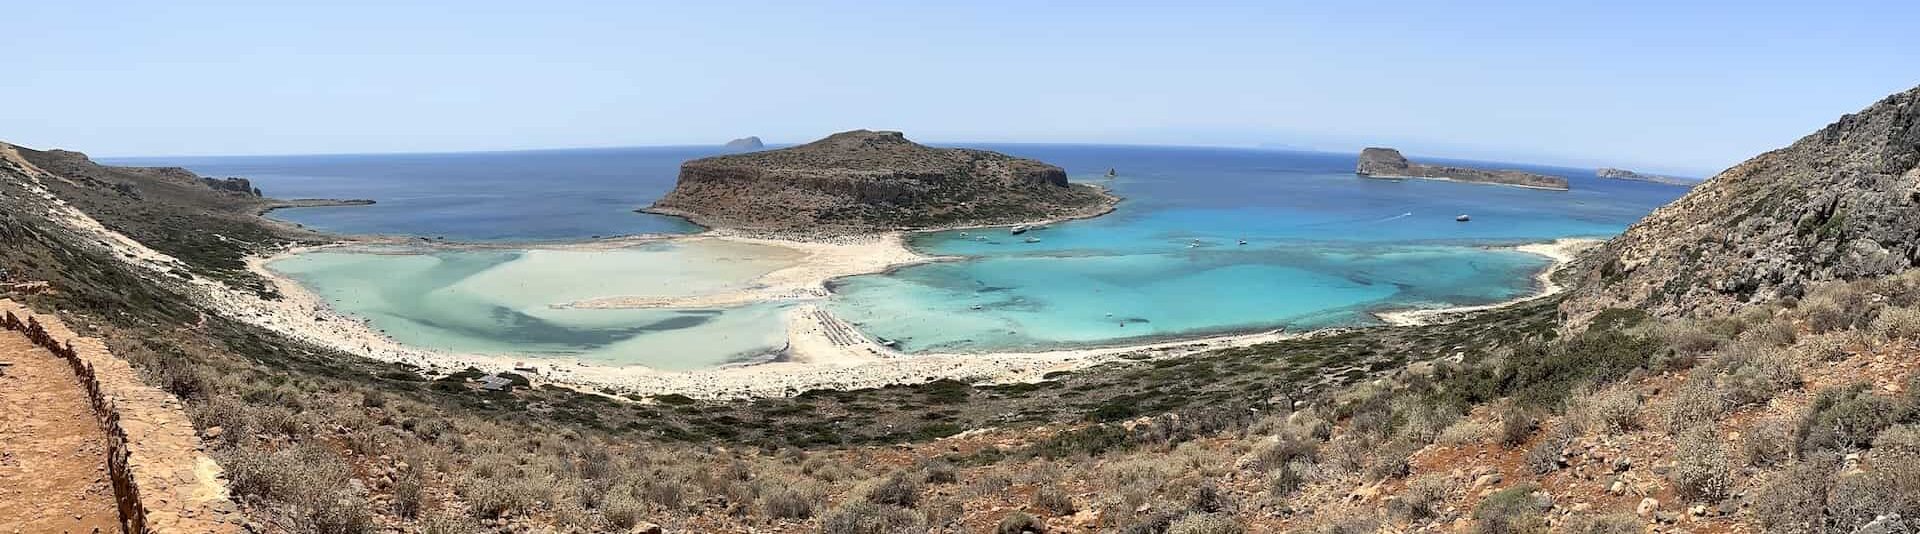 Panoramic view of Balos Beach, Crete